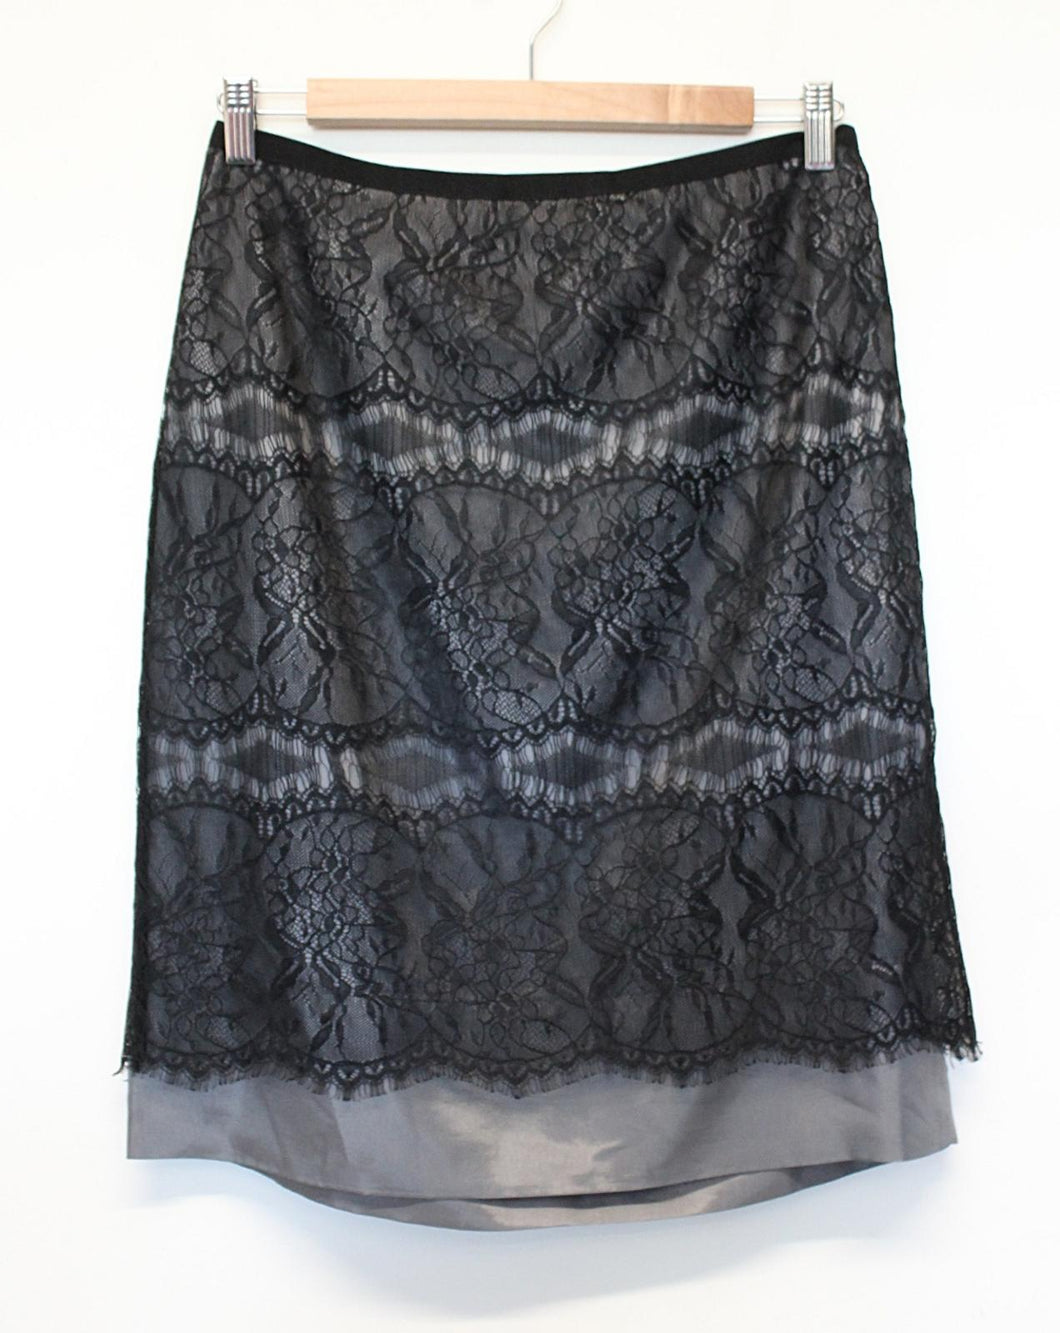 PLANET Ladies Black Side Zip Lace Pencil Skirt w Silver Satin Lining UK10 EU36